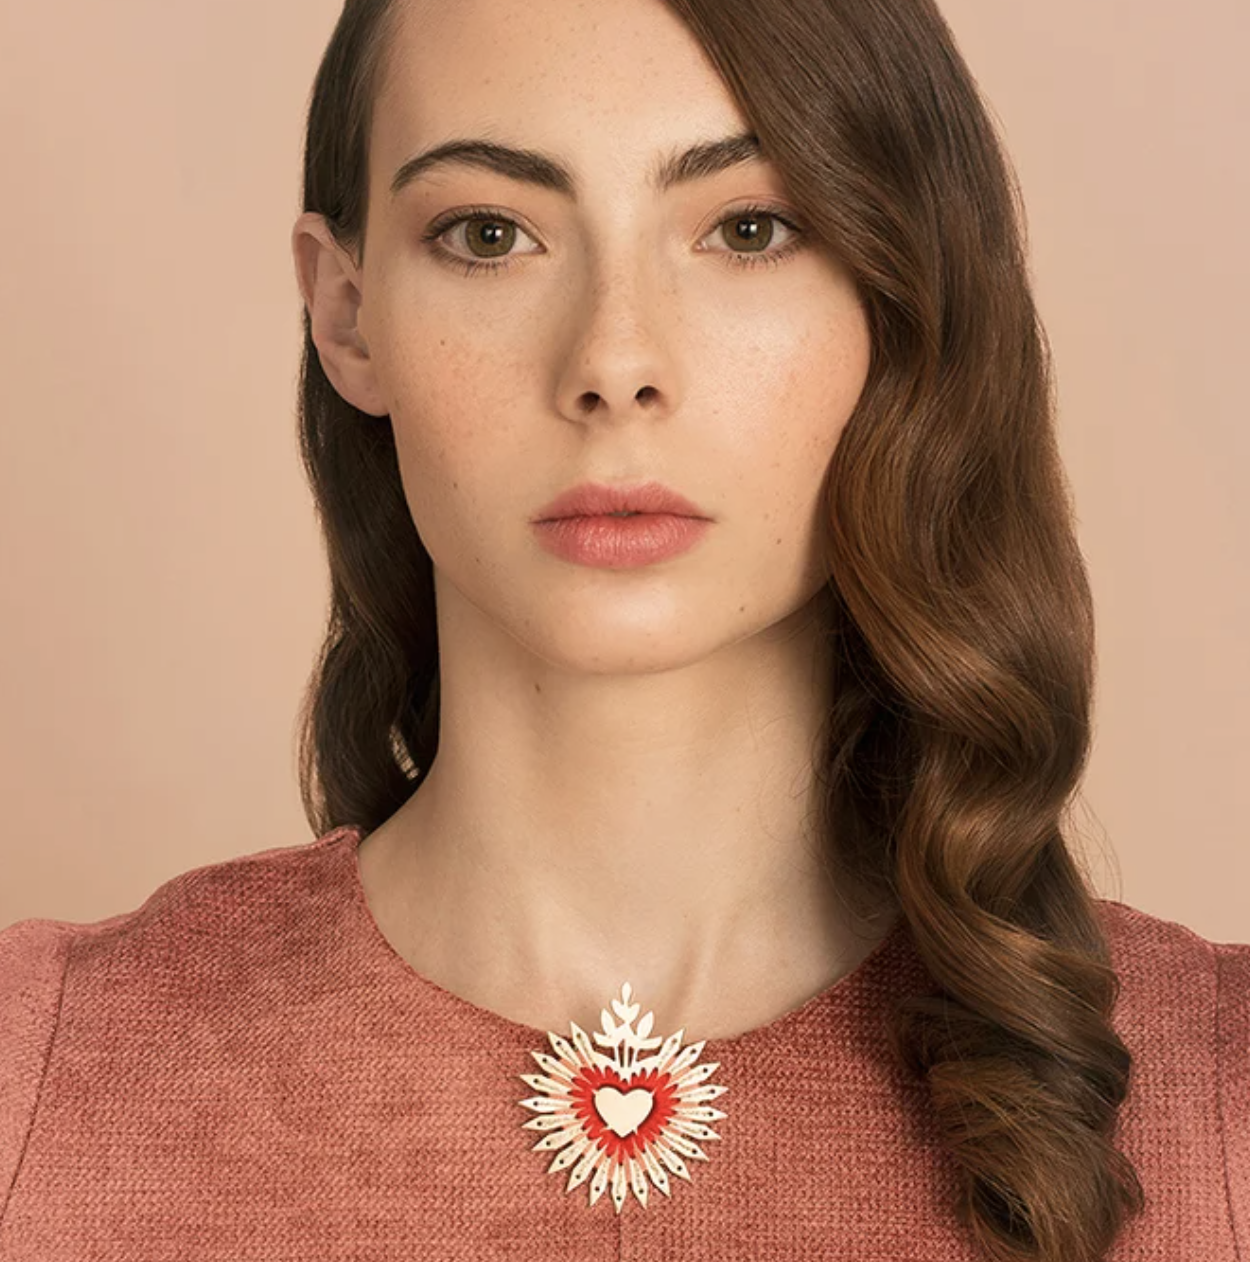   Flamboyant heart pin  - Christelle DIT Christensen 